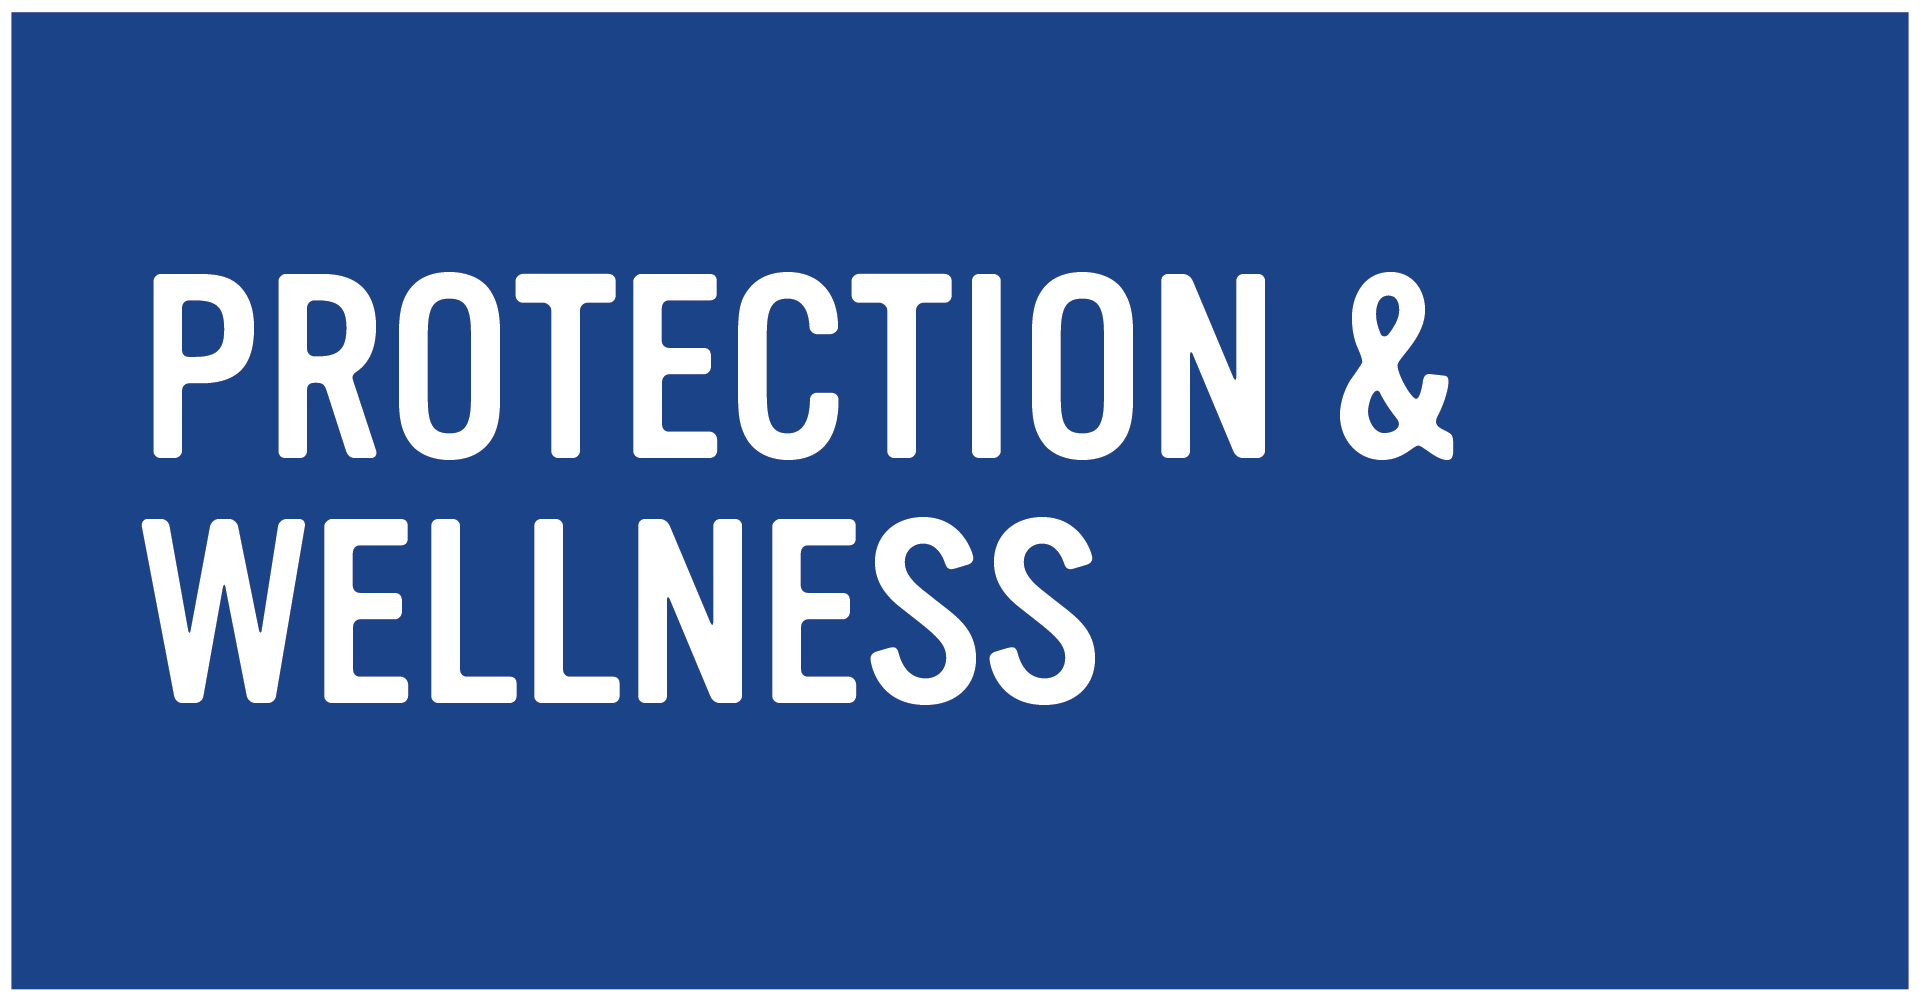 Protection & Wellness